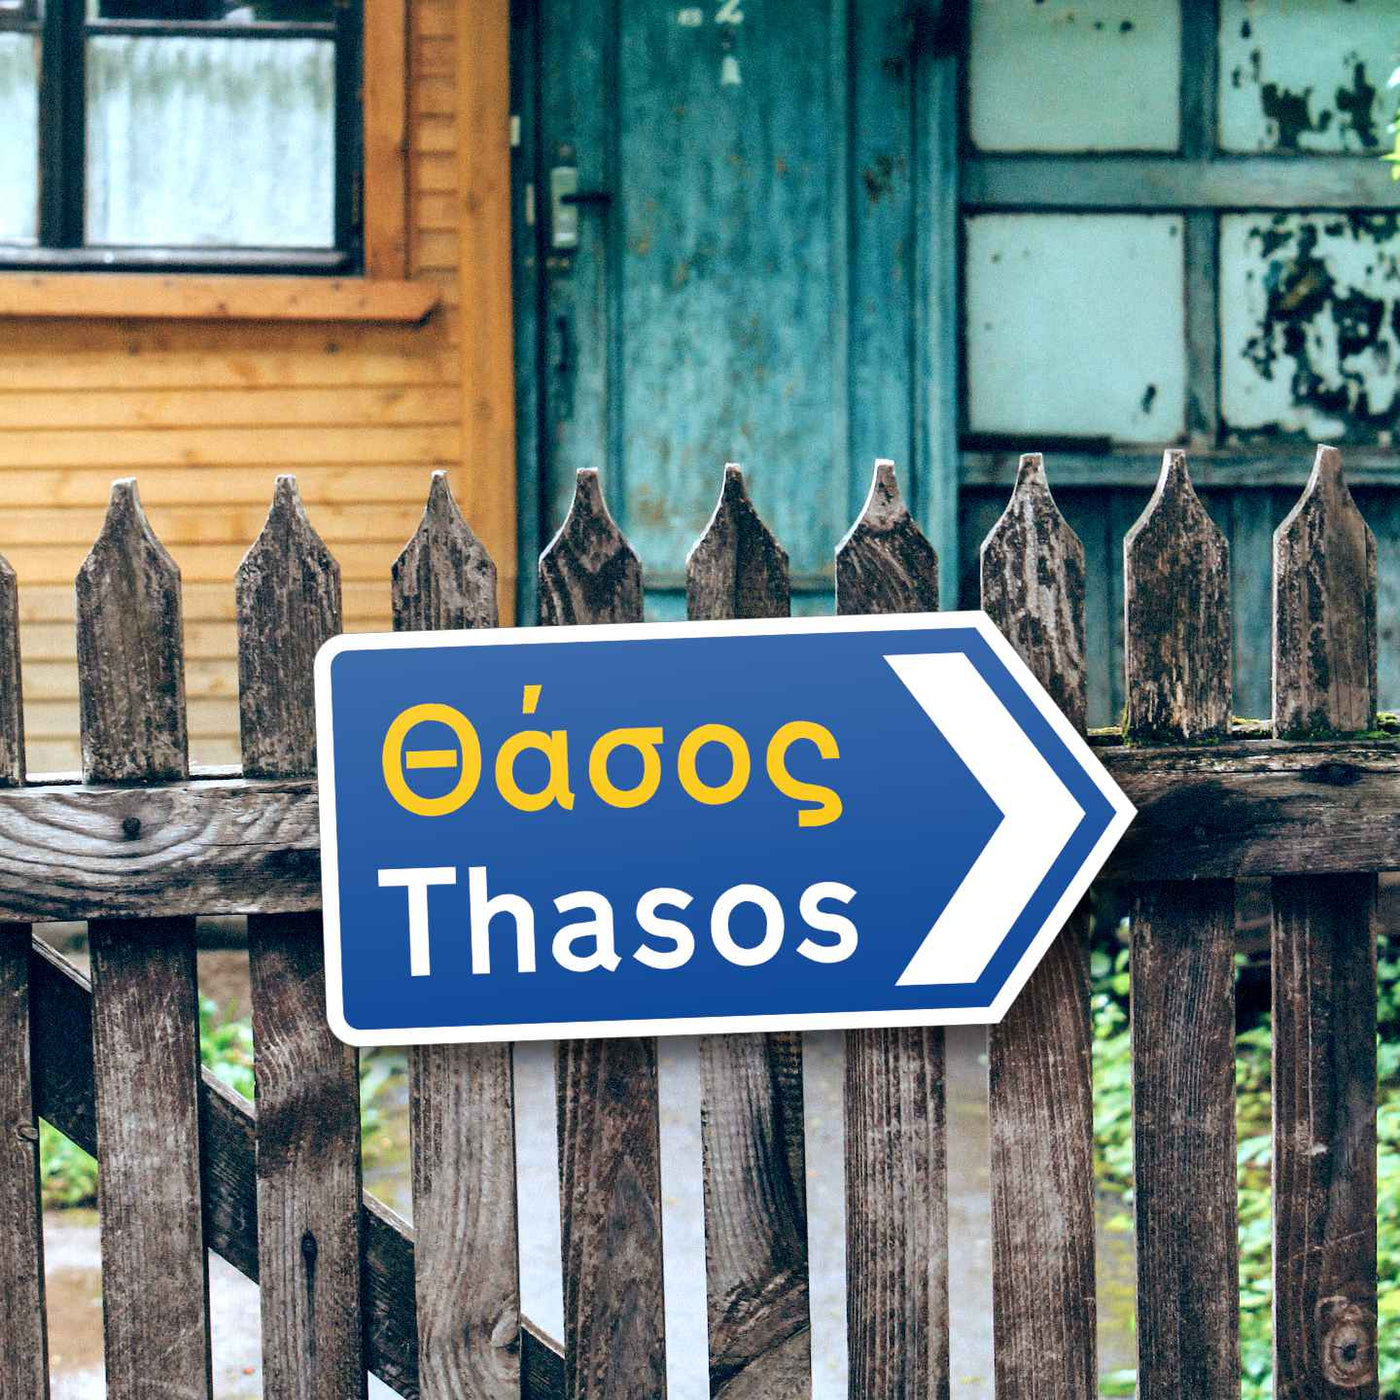 Thasos Greek road sign